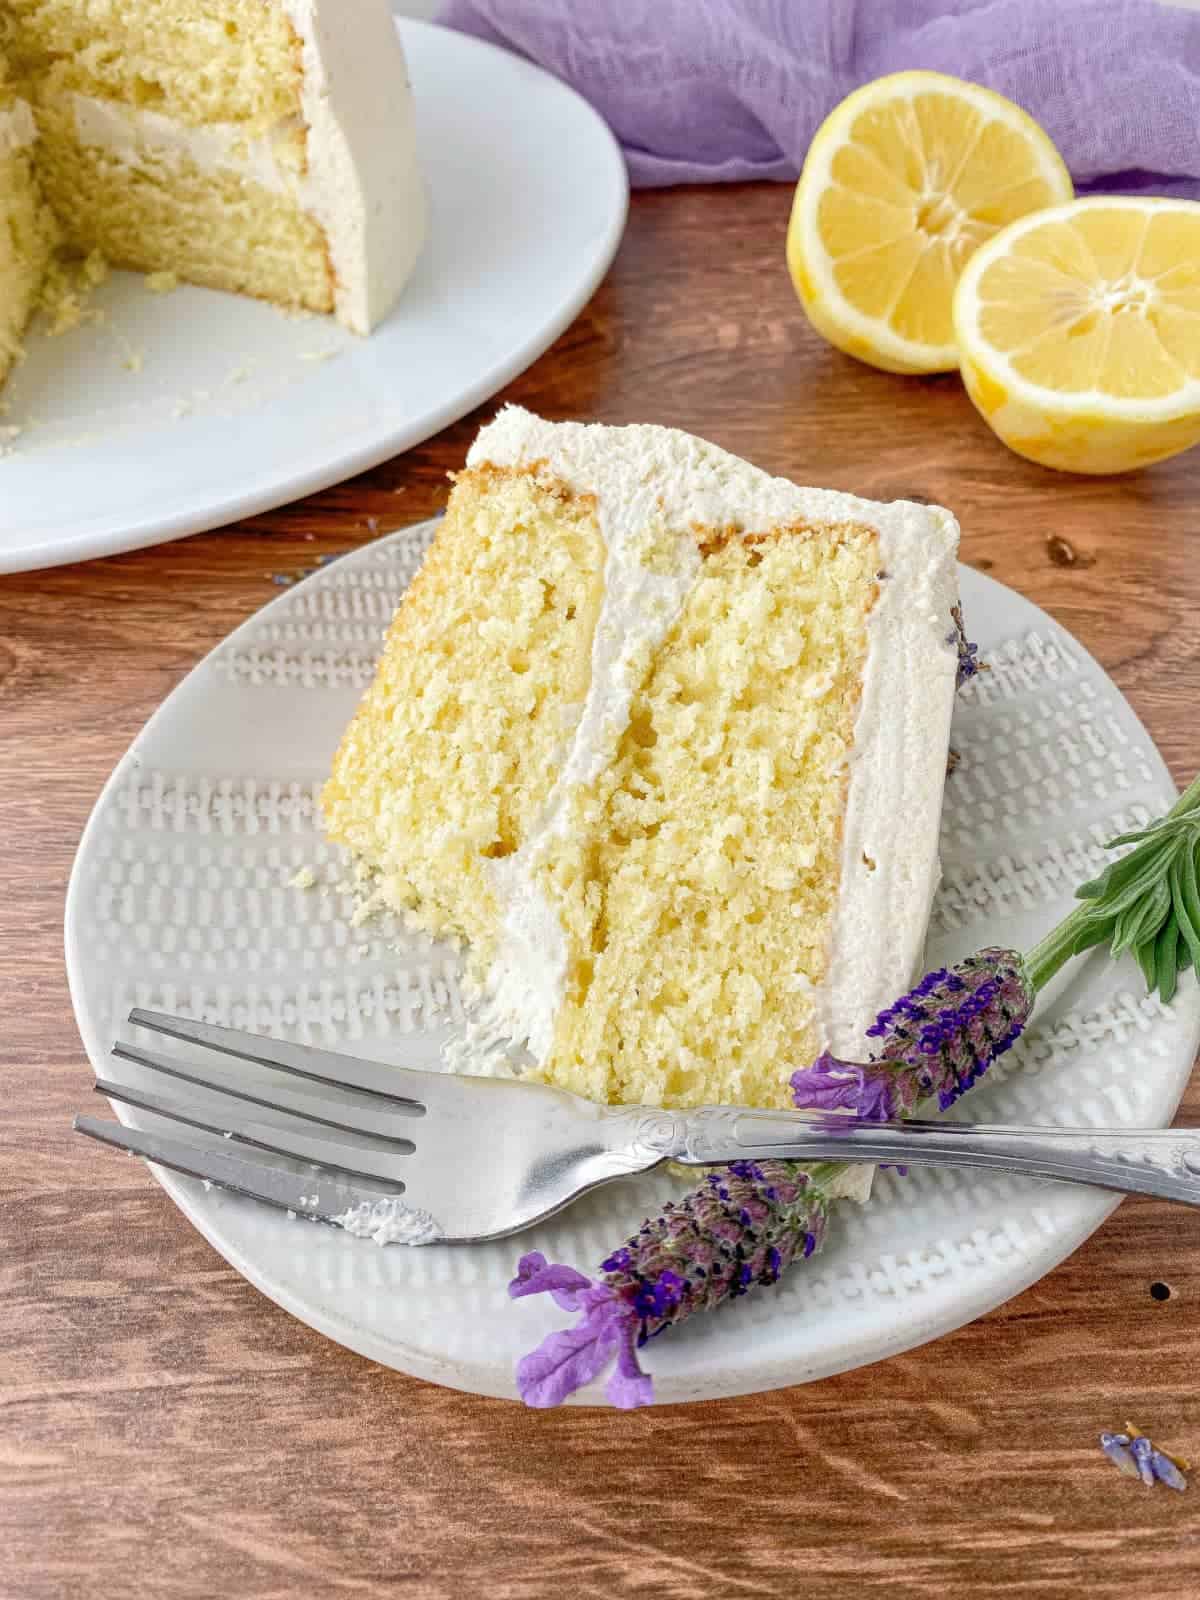 Slice of Lavender Lemon Cake with a bite missing.